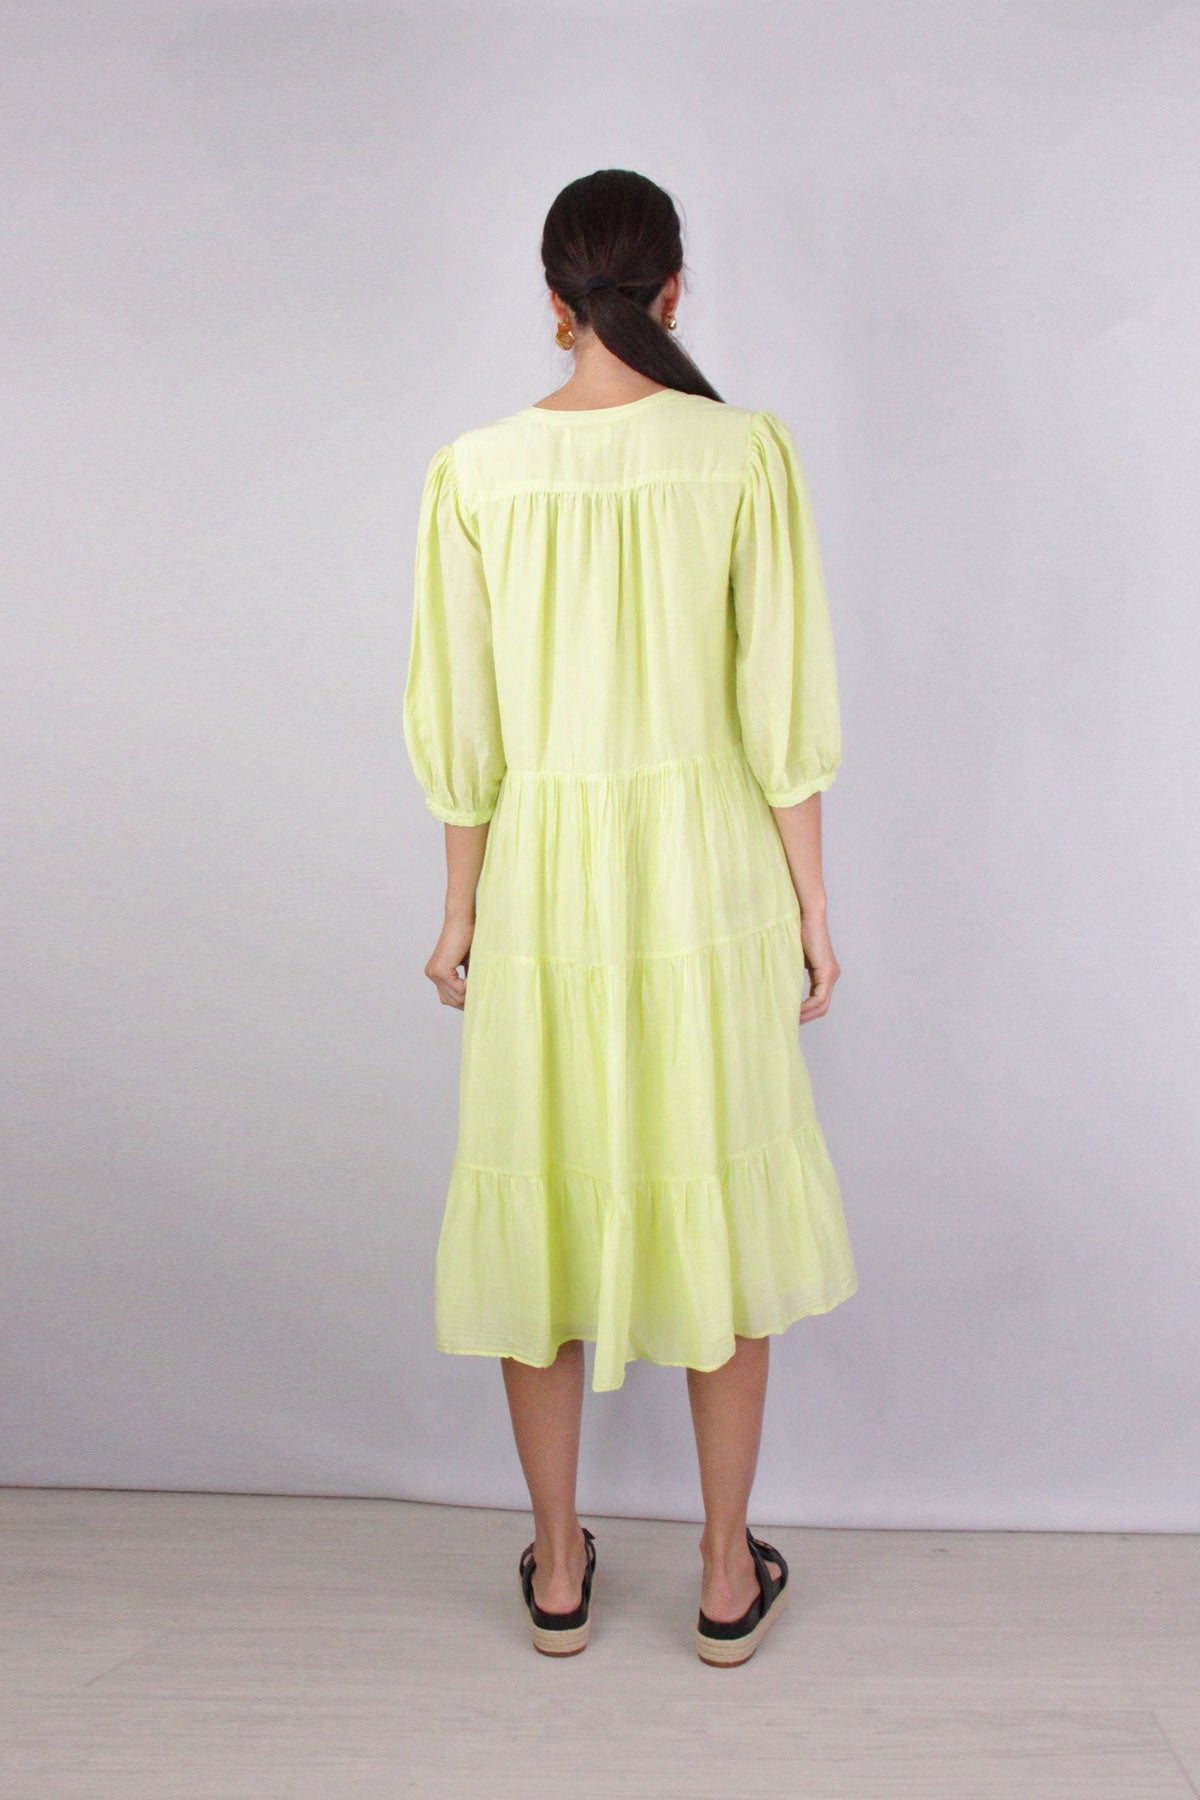 Jacqueline Puff Sleeve Dress in Citron - shop-olivia.com